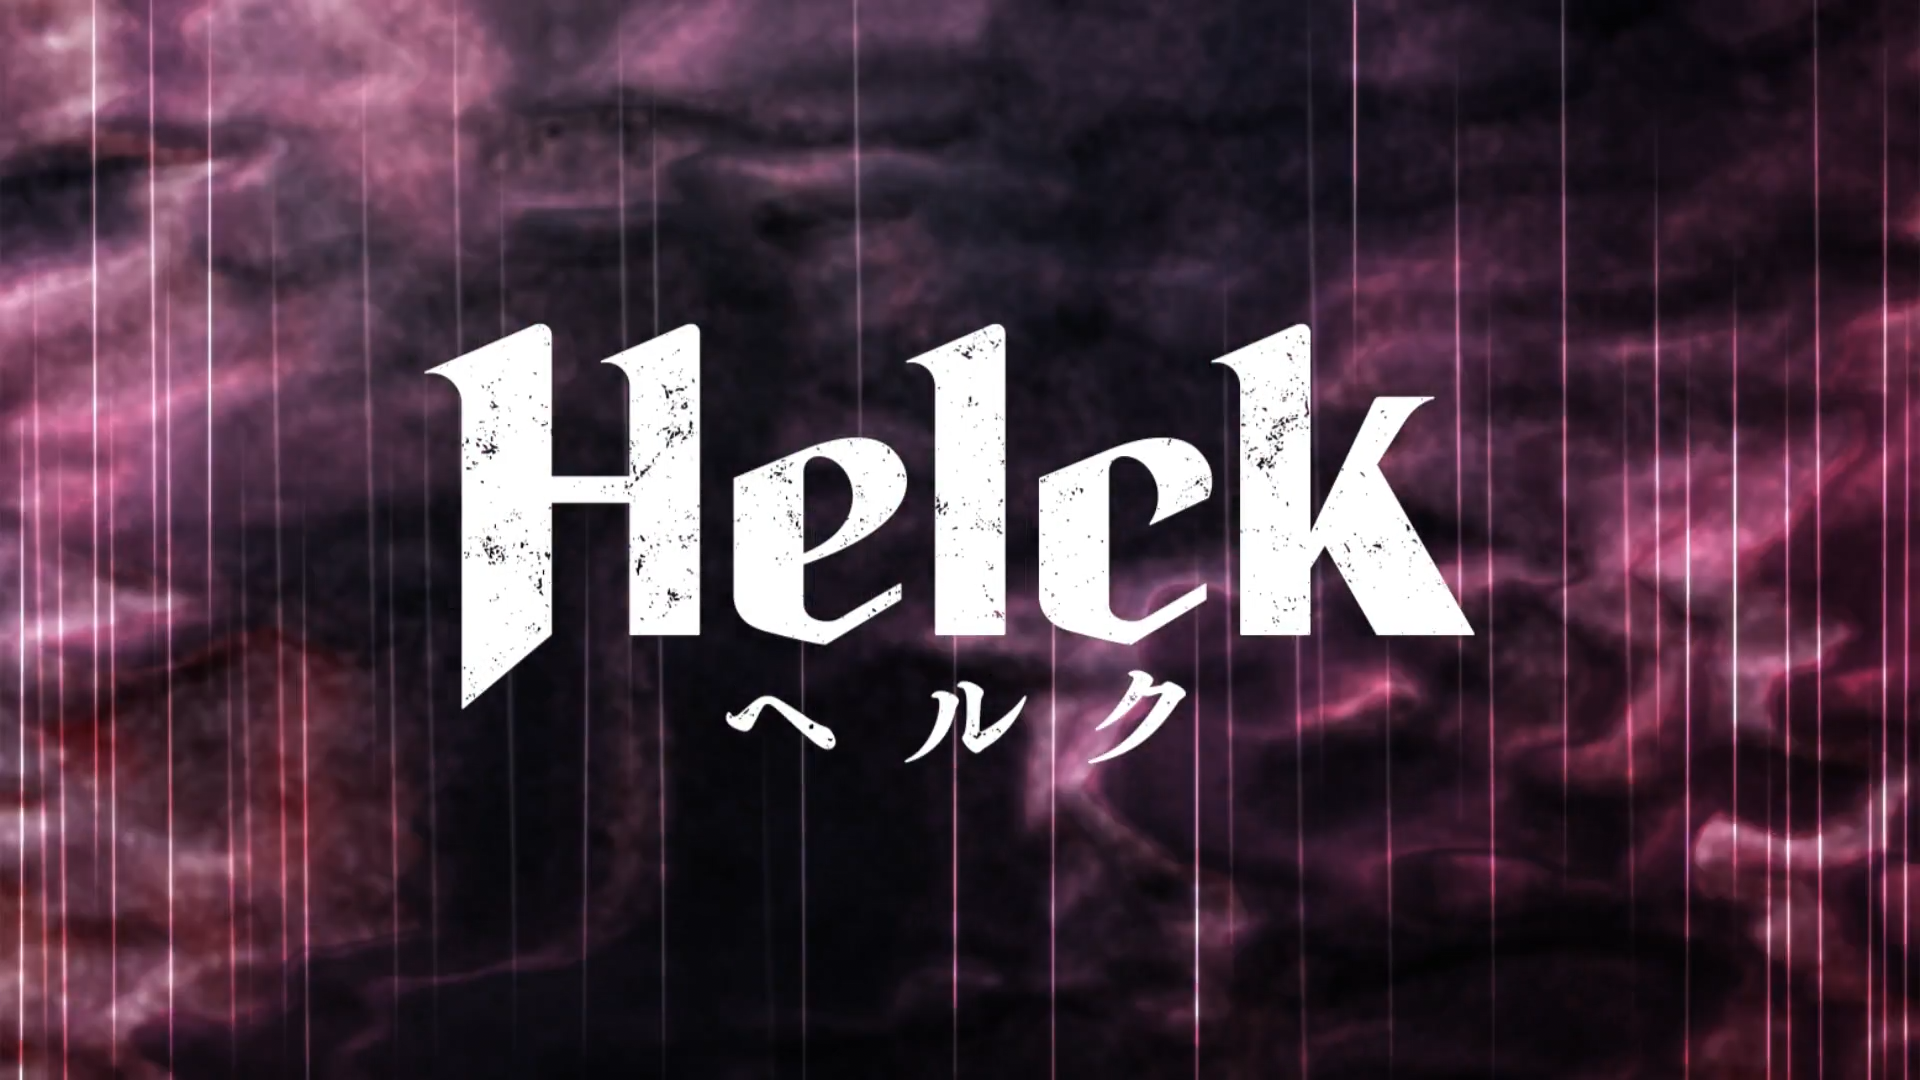 Helck  Хелк - 07  Bg Mtl Sub  - Vbox7